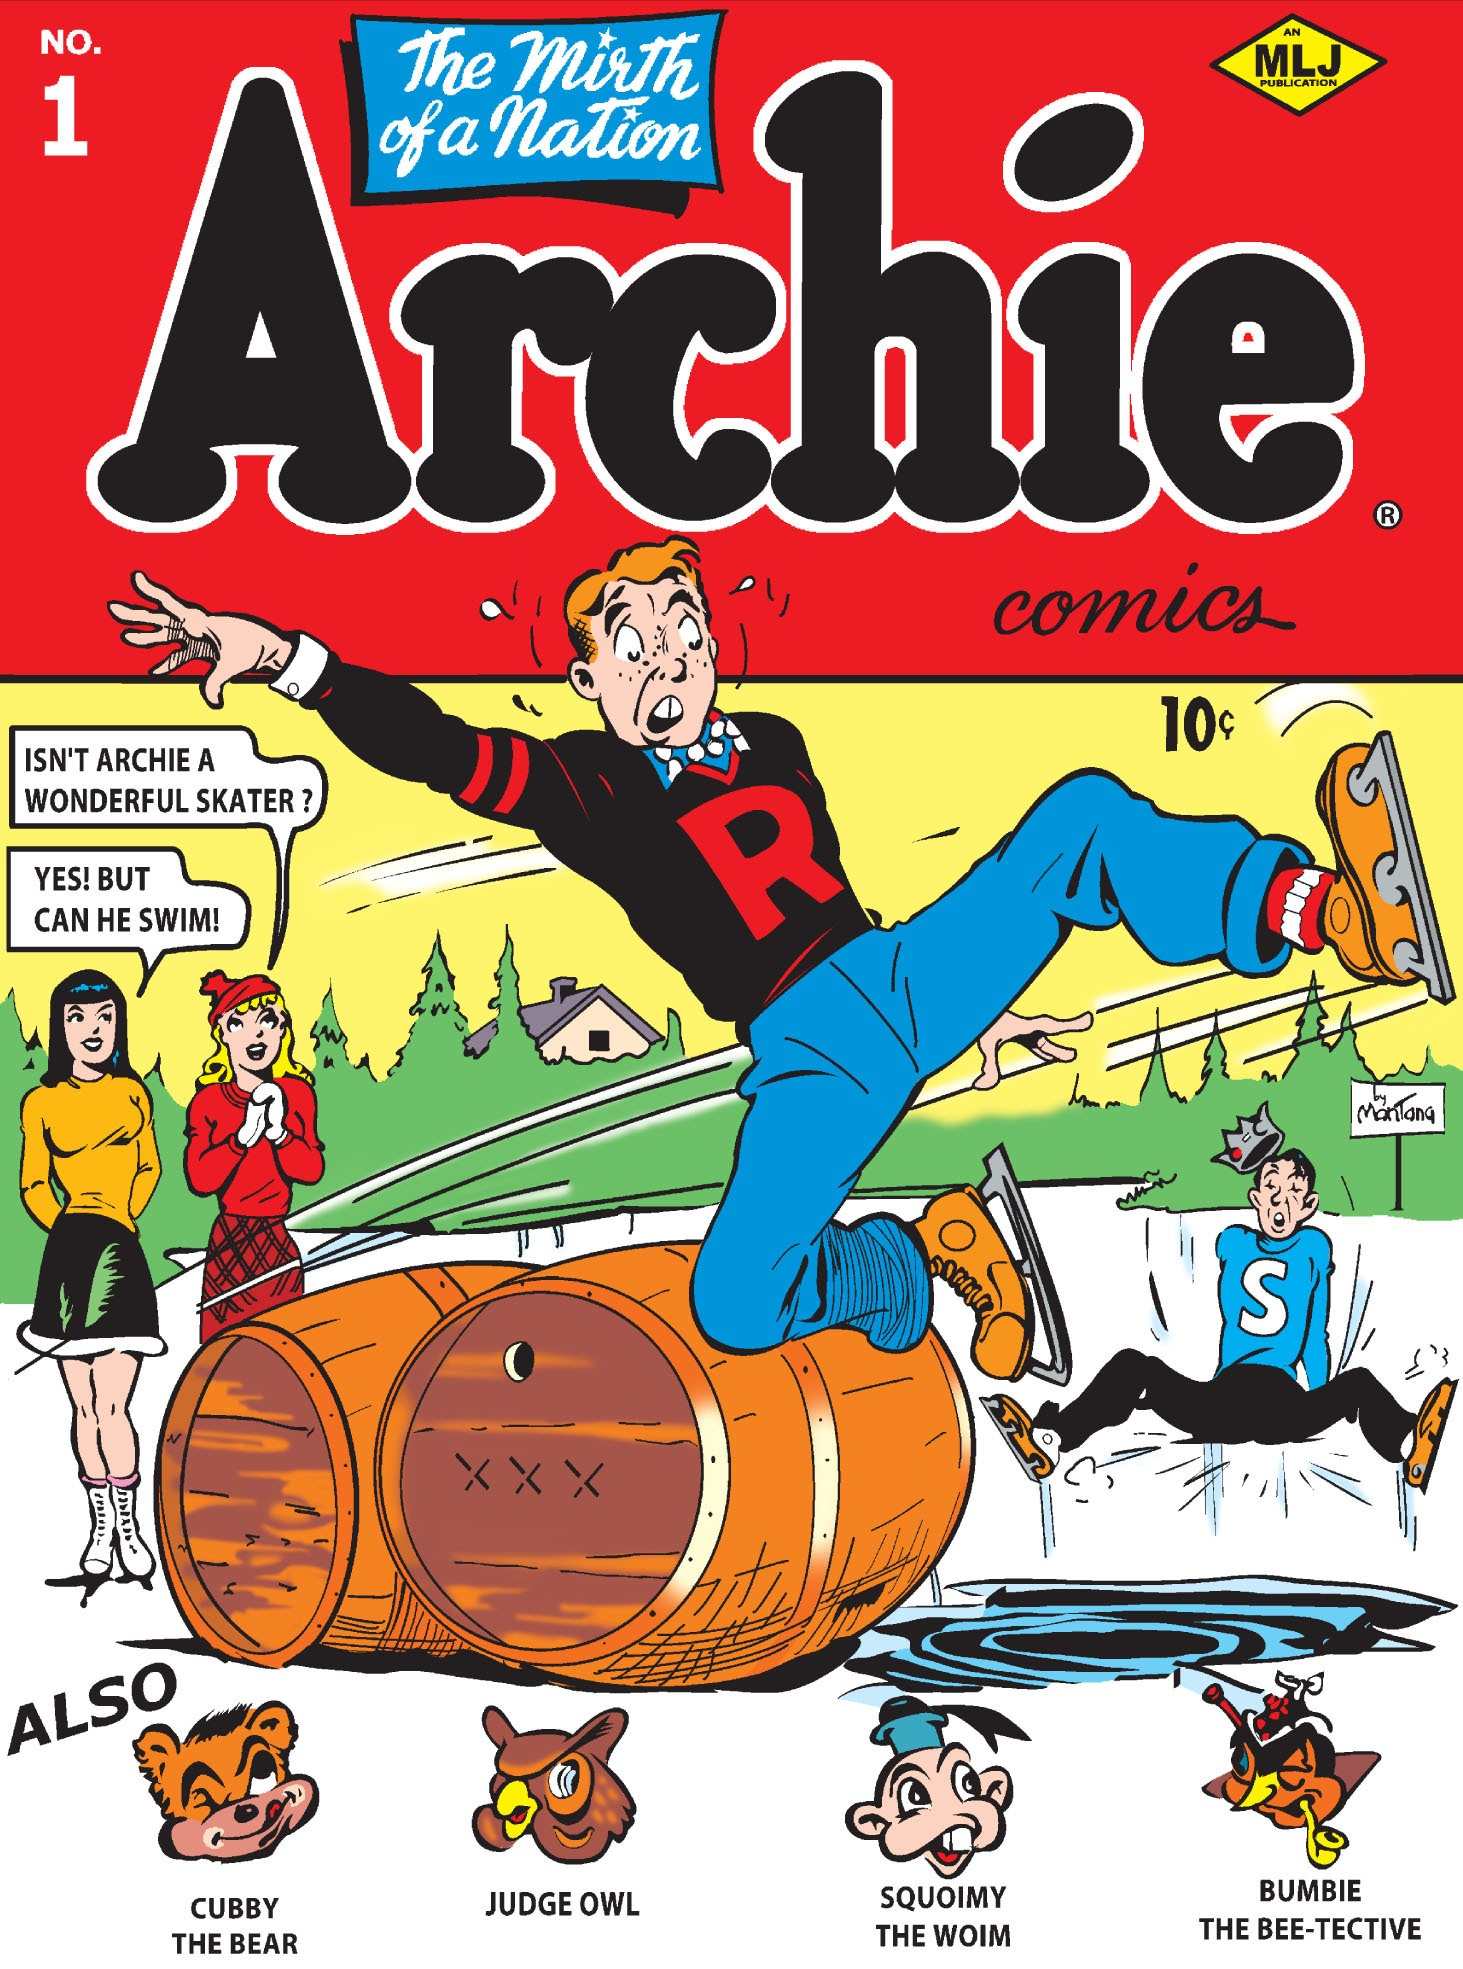 Read archie comics online free